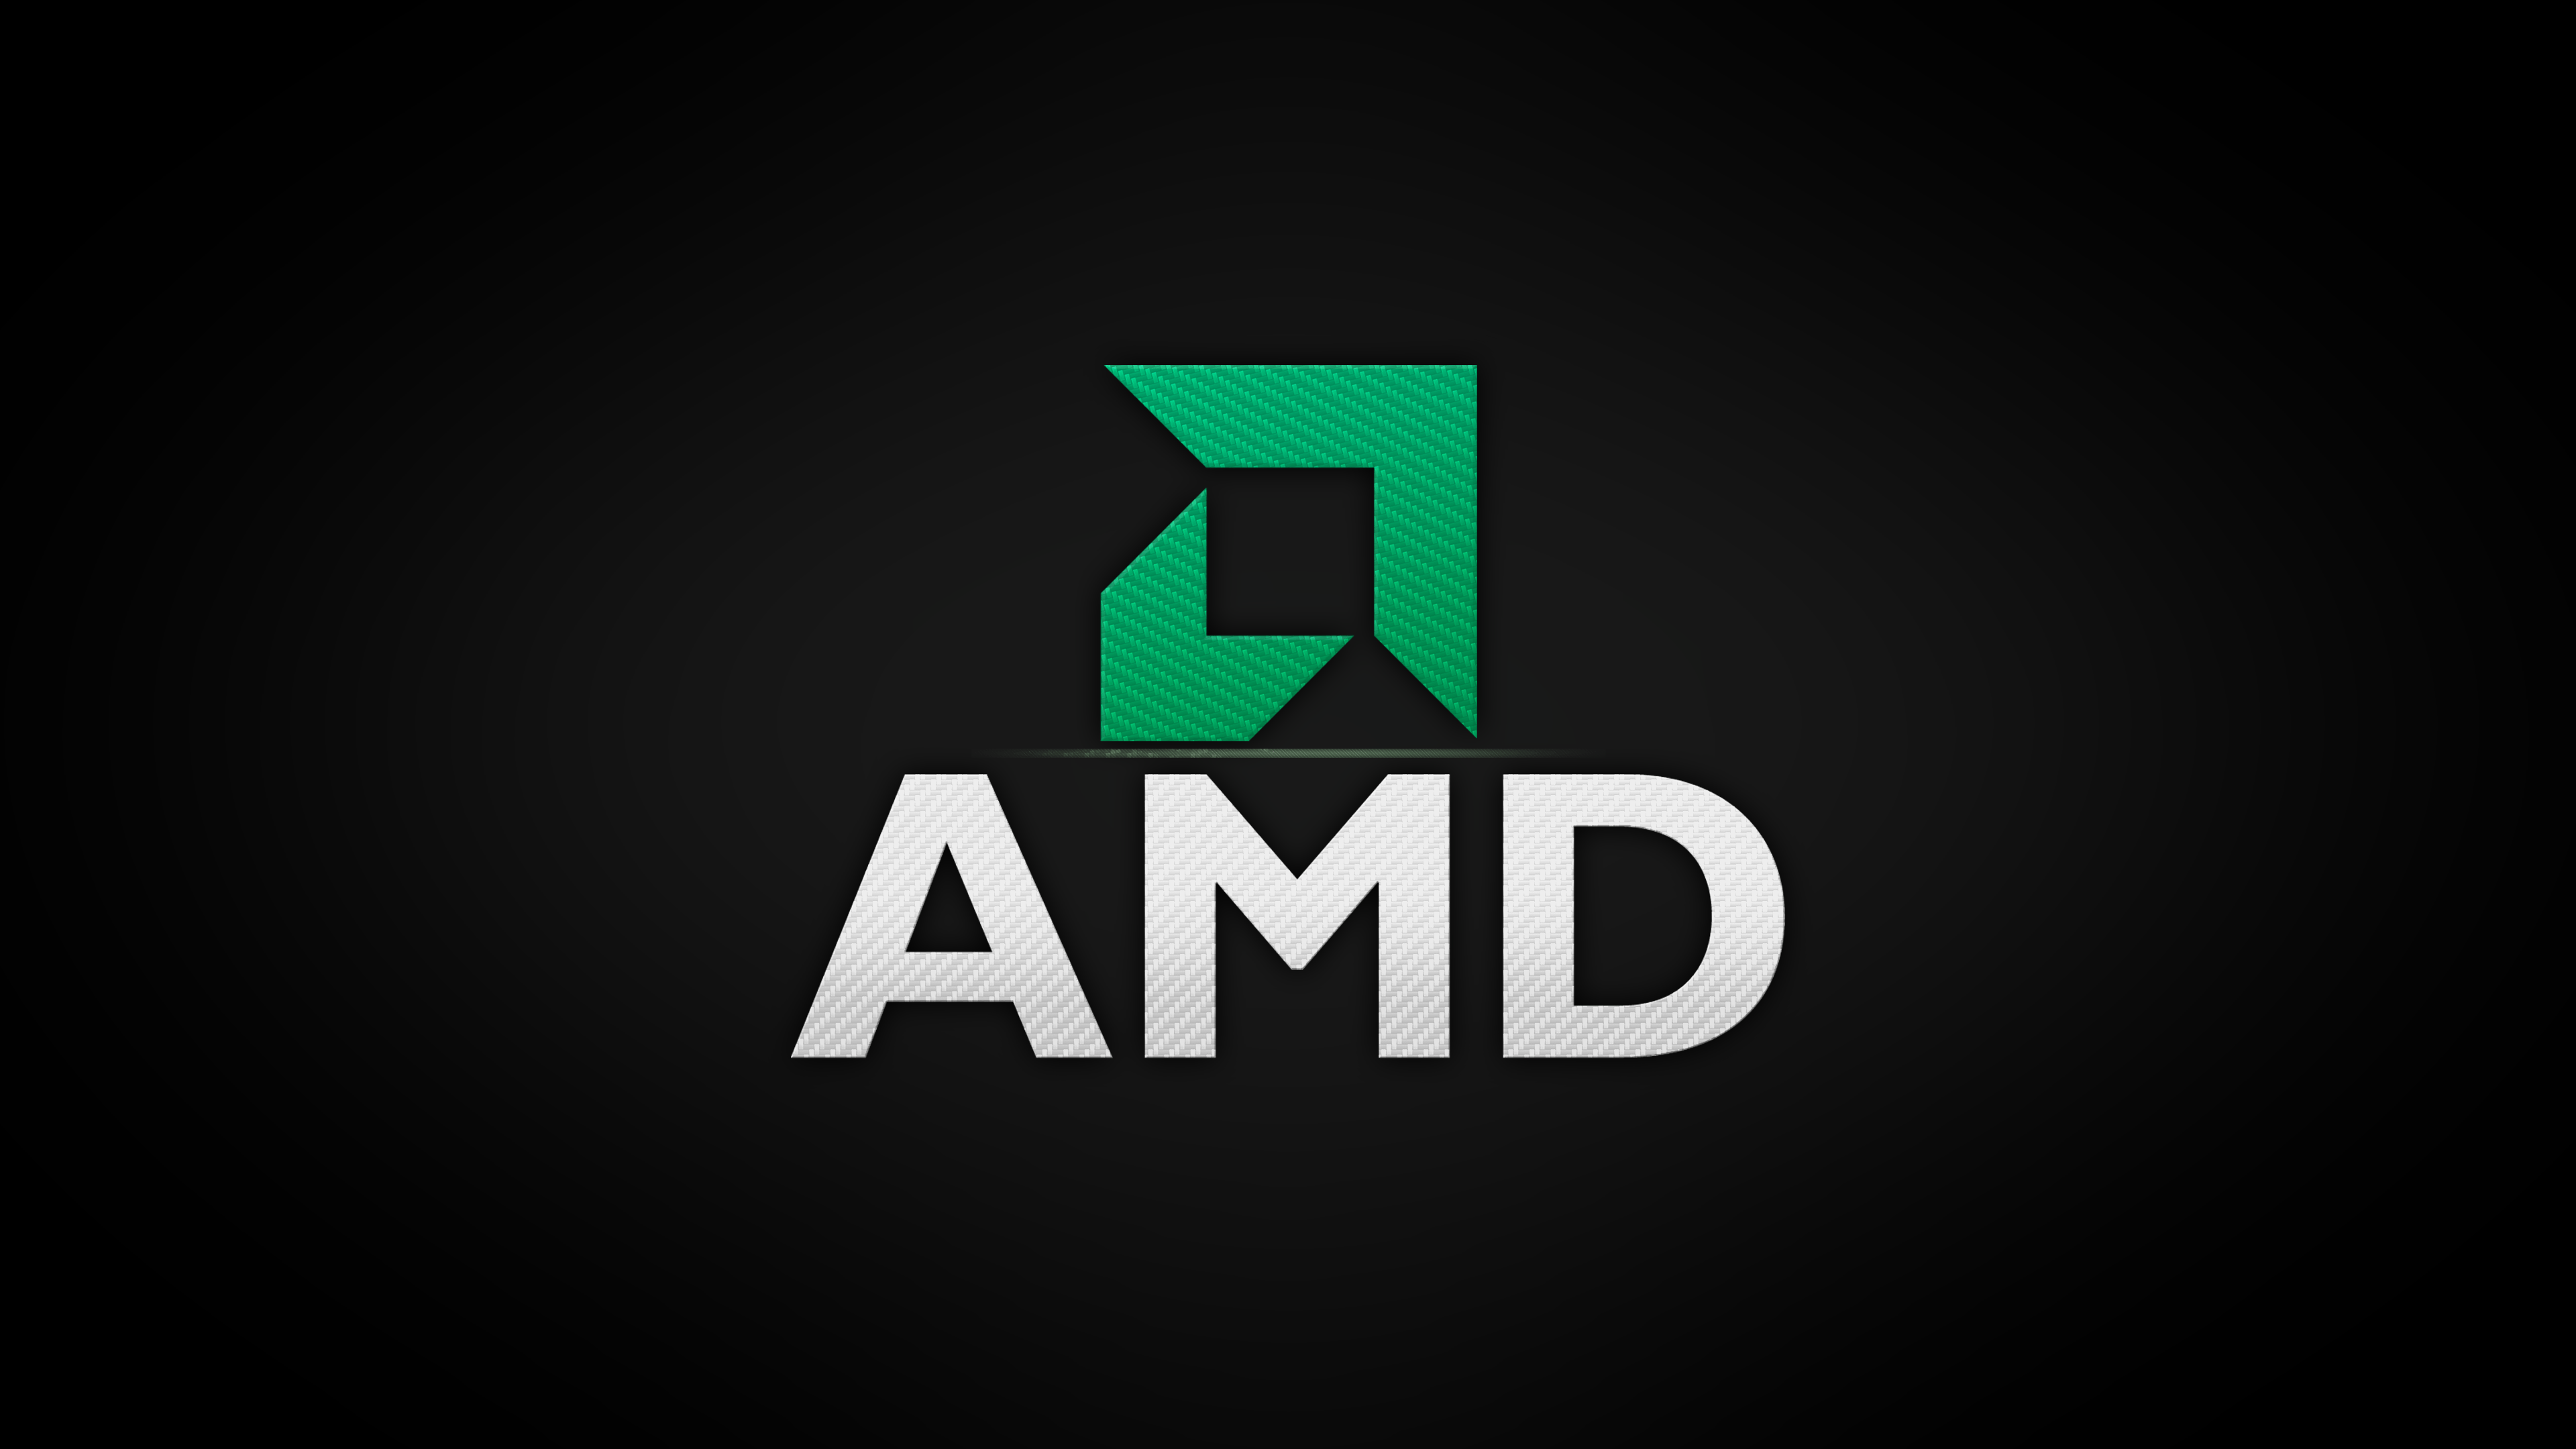 AMD Logo - Amd Brand Logo, HD Logo, 4k Wallpaper, Image, Background, Photo